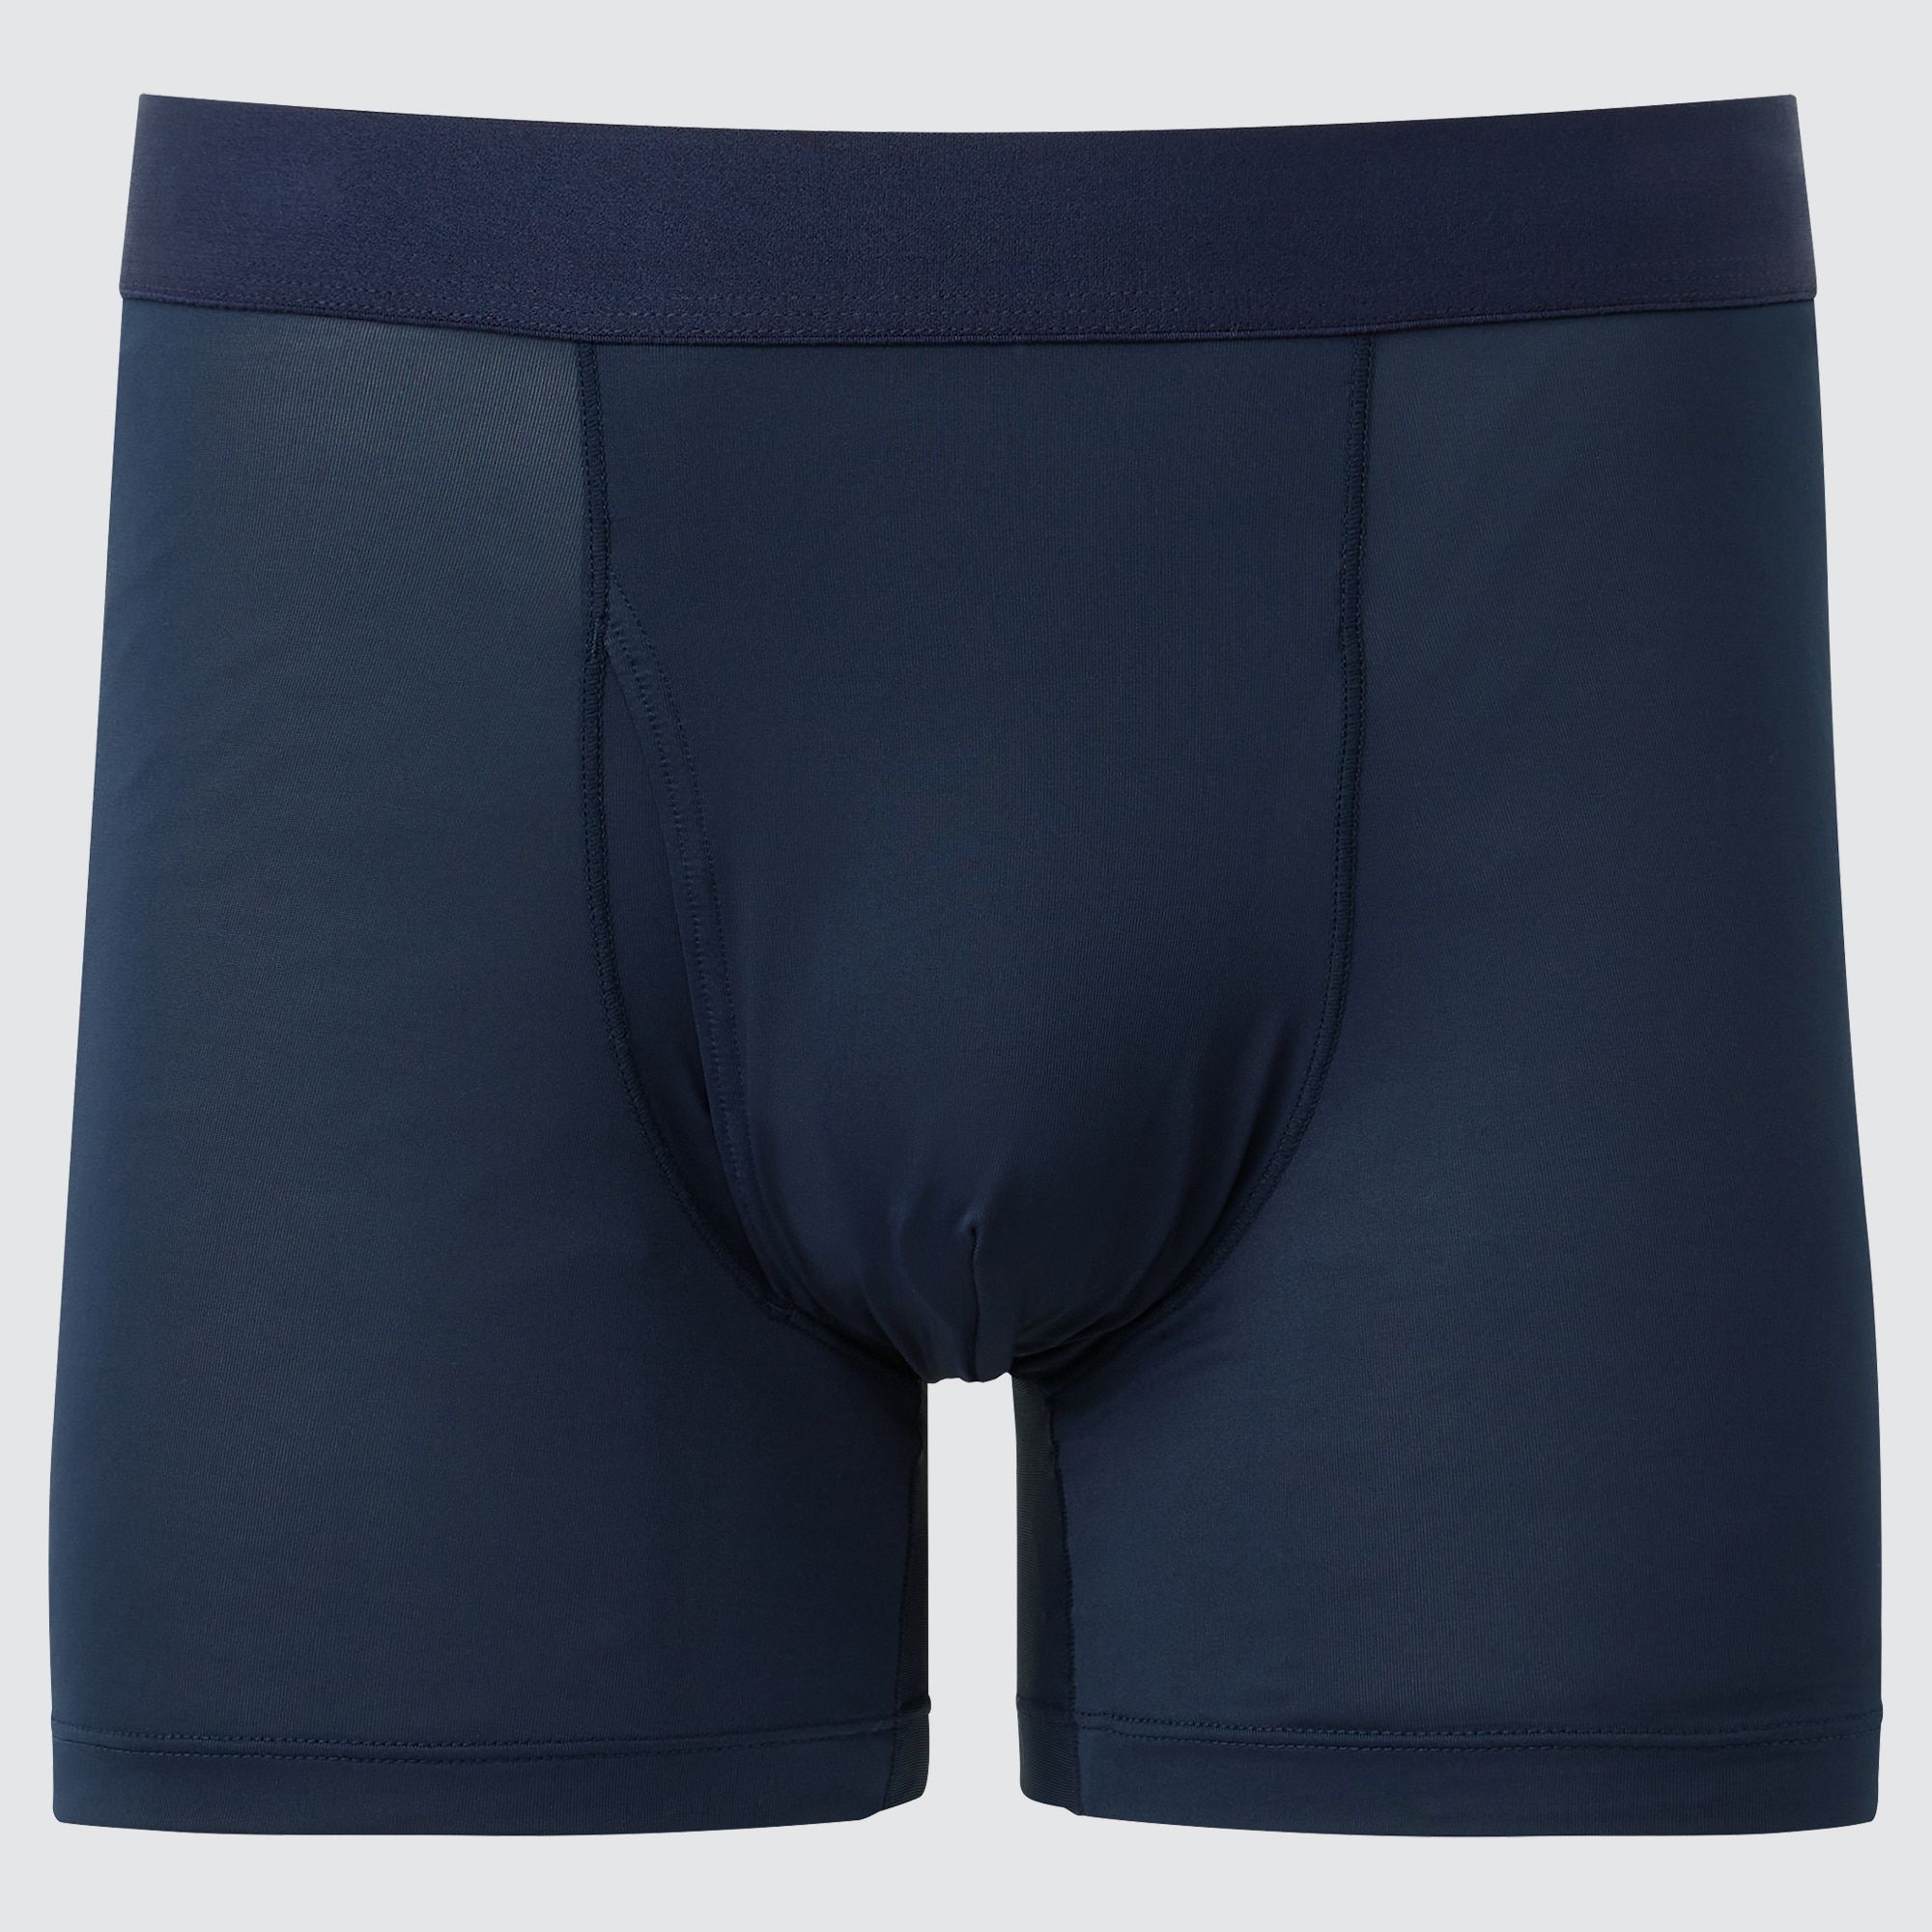 VANMASS Mems How You Doin Underwear Performance Quick Dry Boxer Briefs